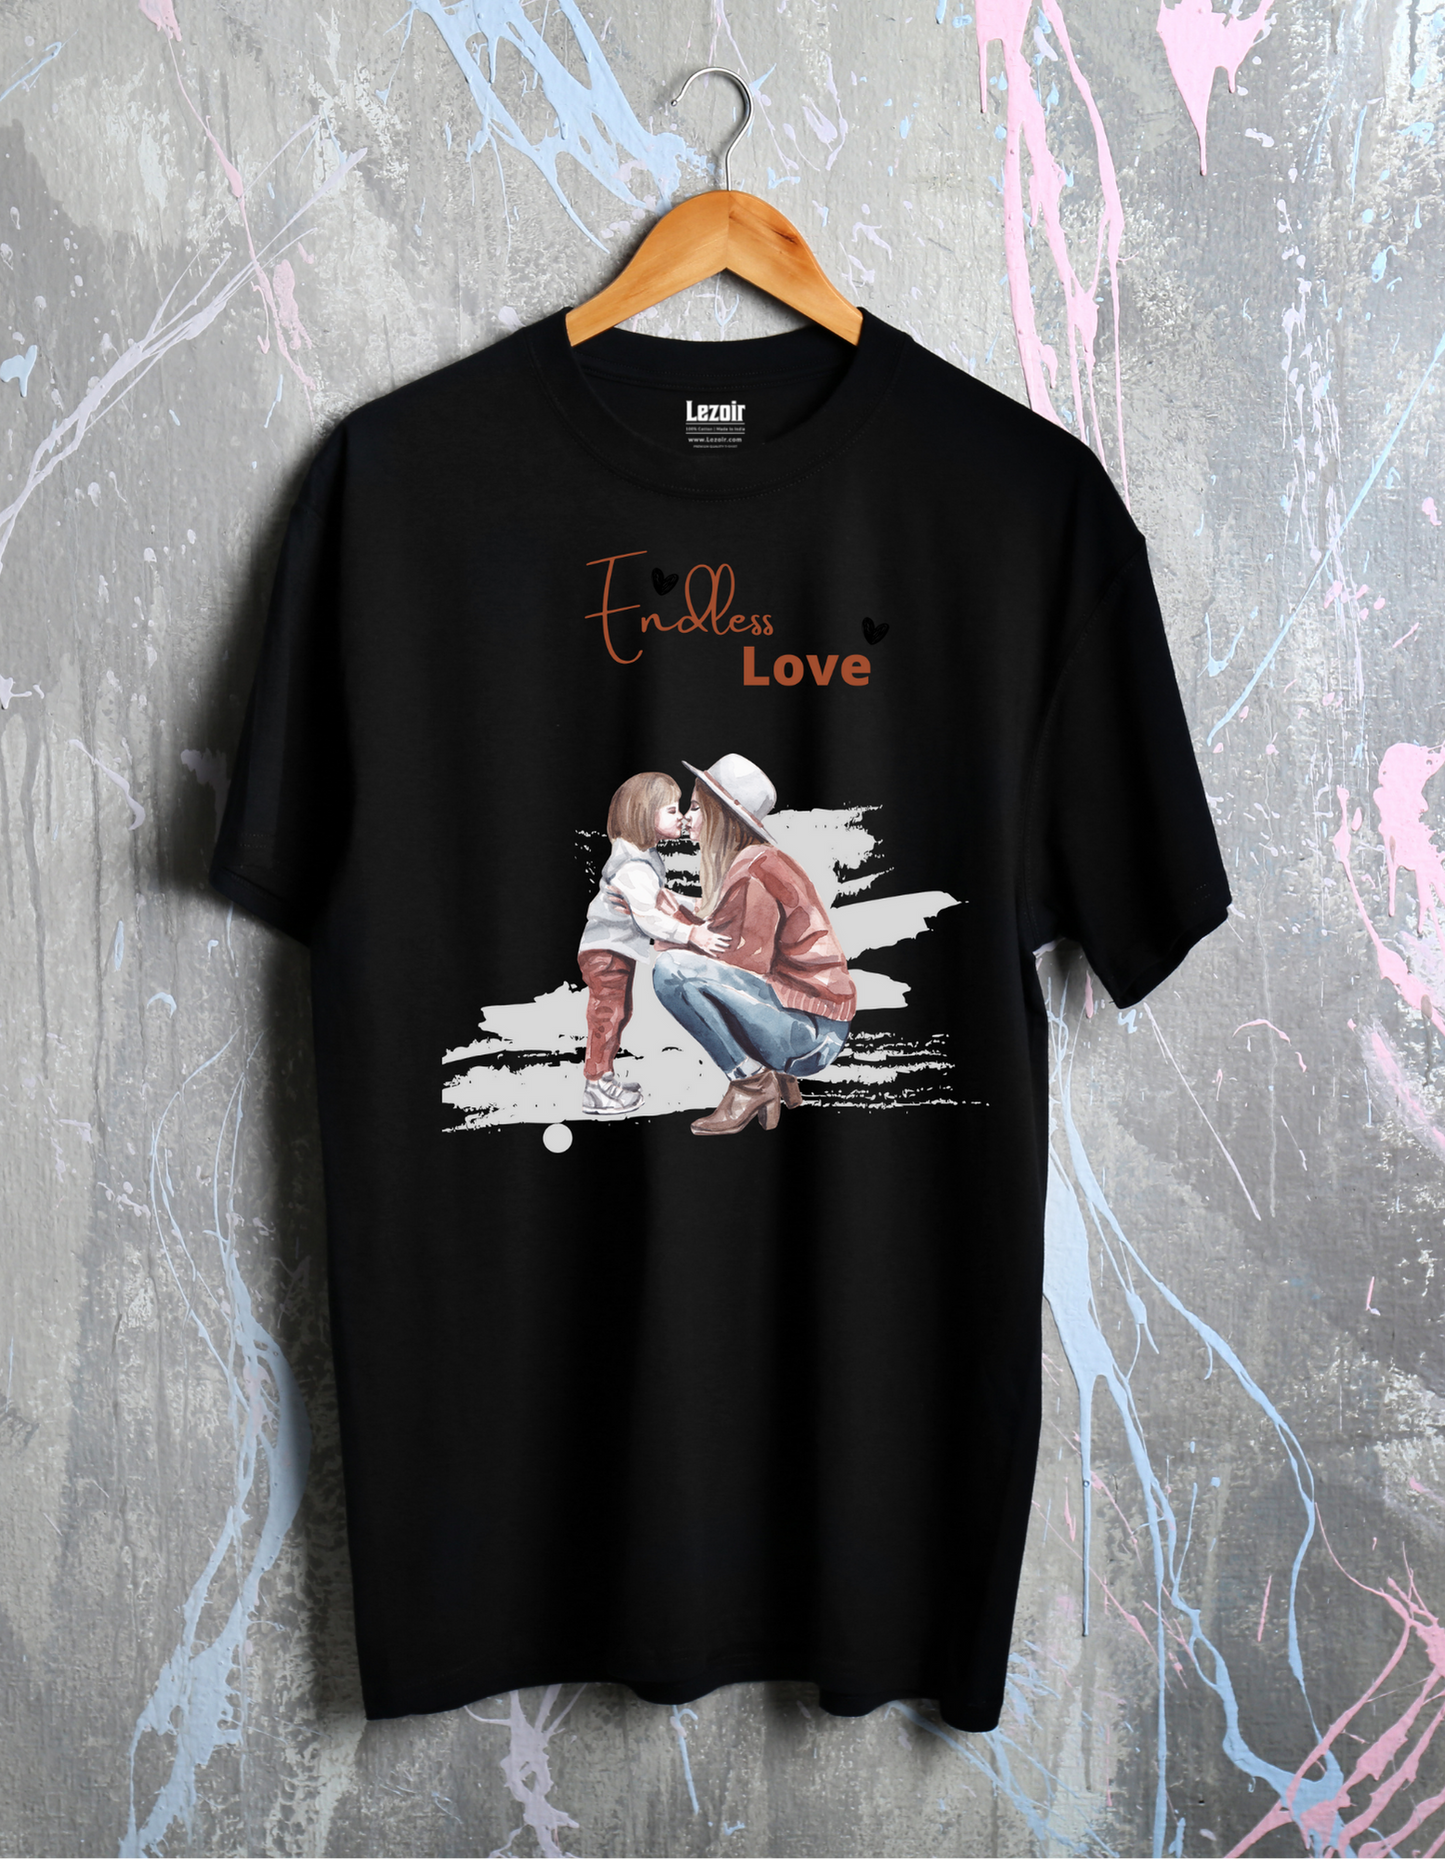 Endless love Printed Cotton Black Unisex T-Shirt